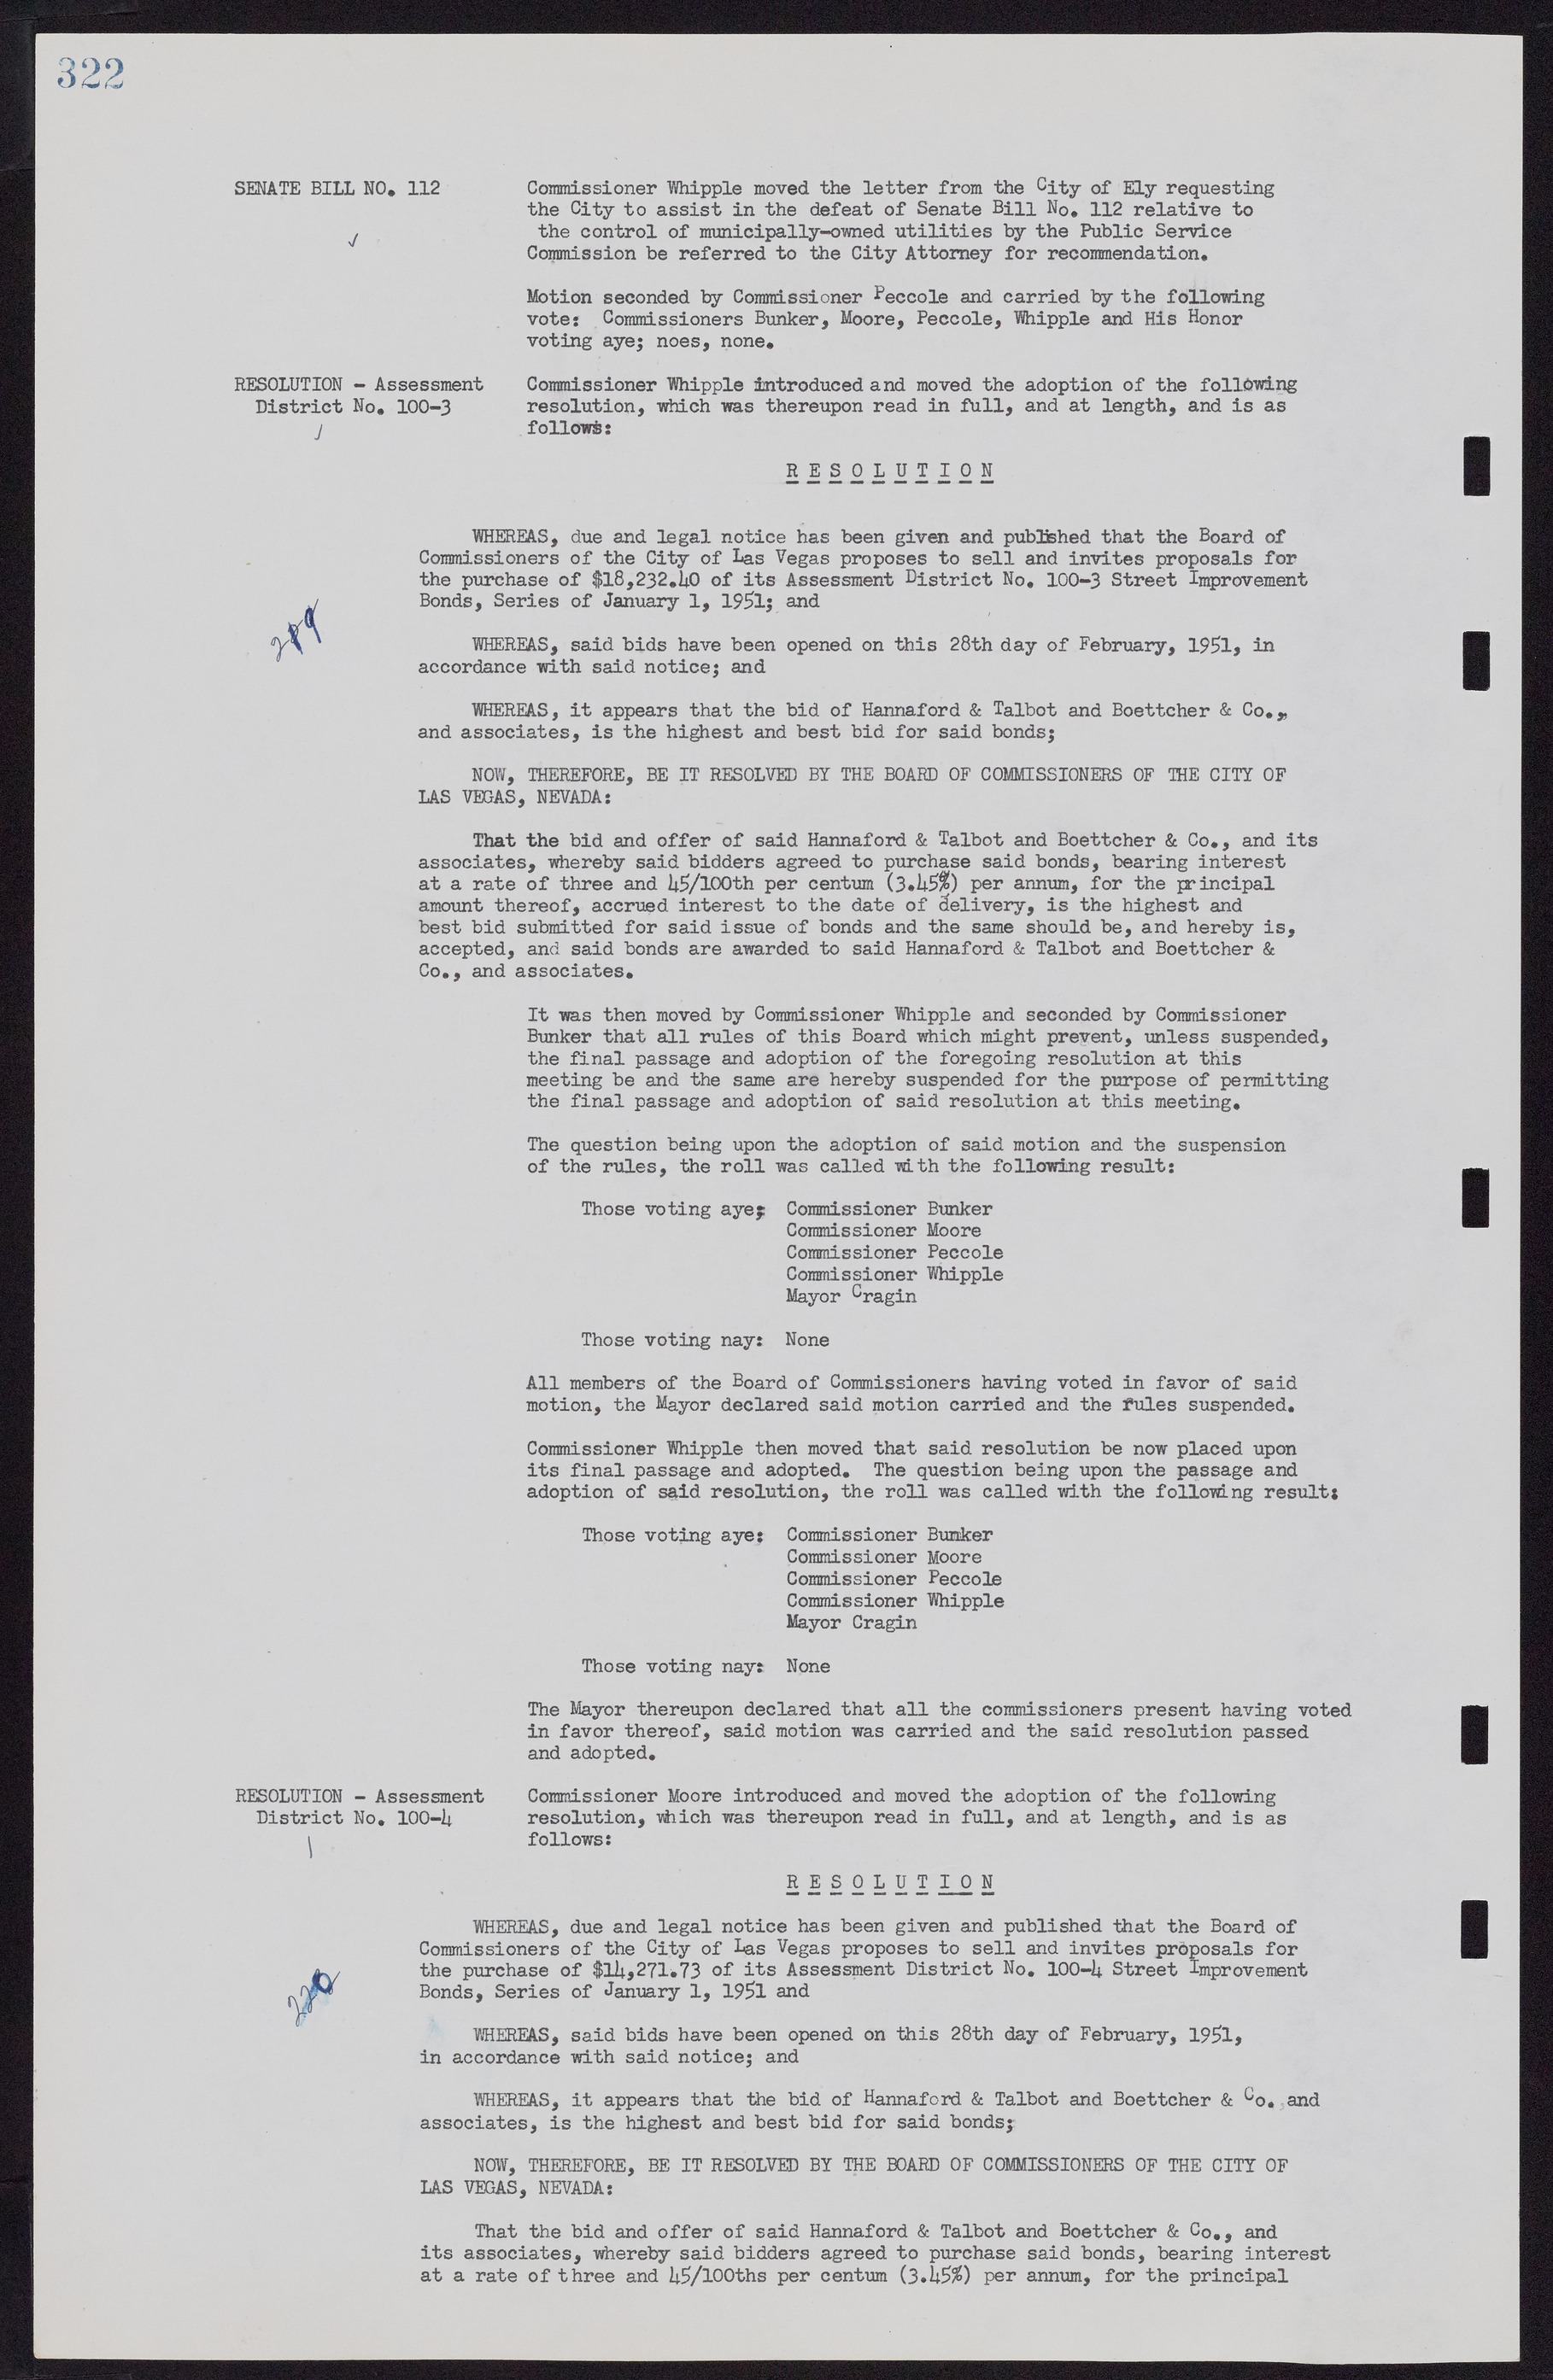 Las Vegas City Commission Minutes, November 7, 1949 to May 21, 1952, lvc000007-334